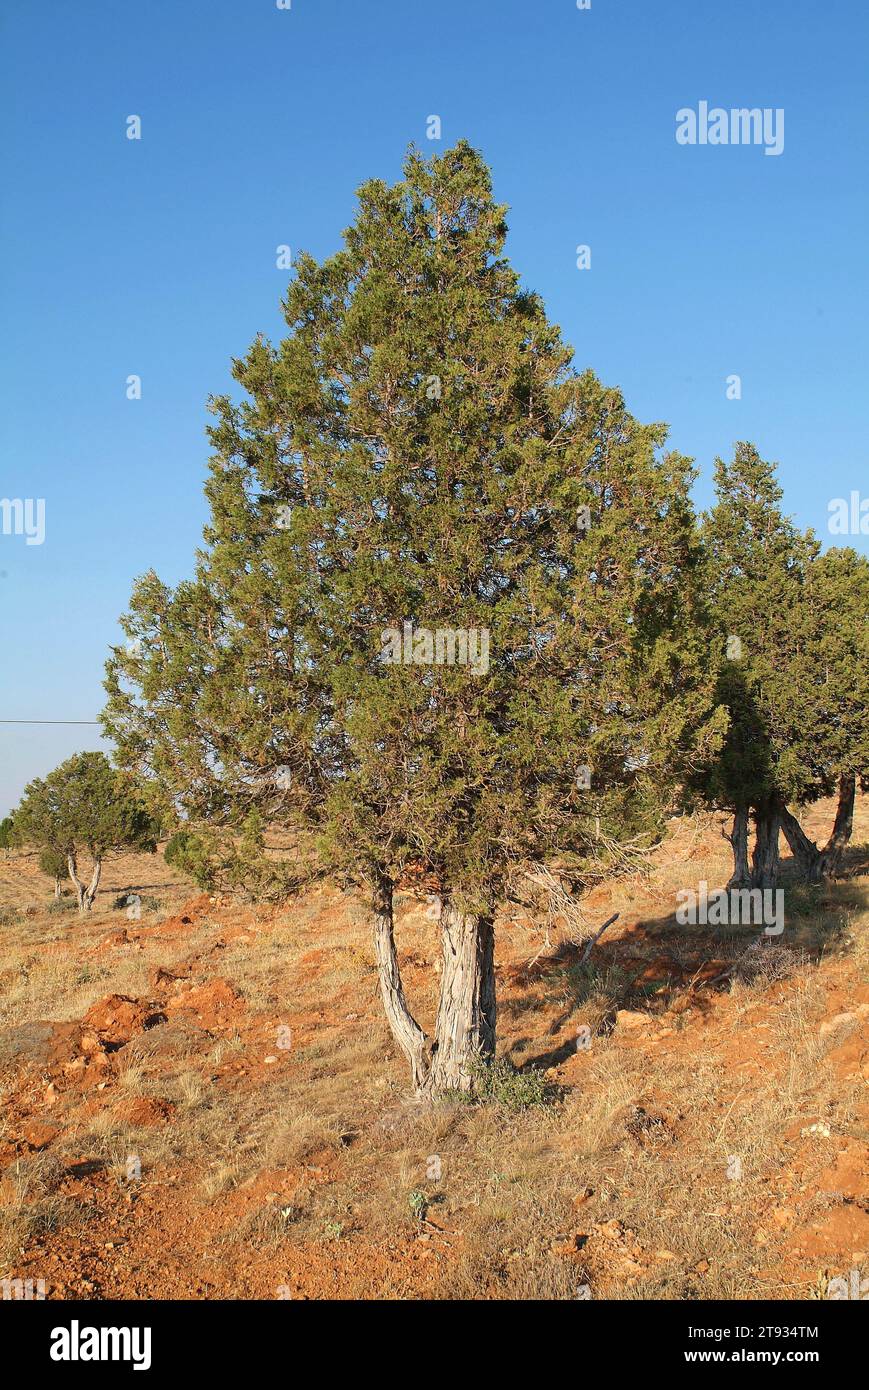 Greek juniper (Juniperus excelsa) is a small tree or shrub native to eastern Mediterranean region. This photo was taken in Turkey. Stock Photo